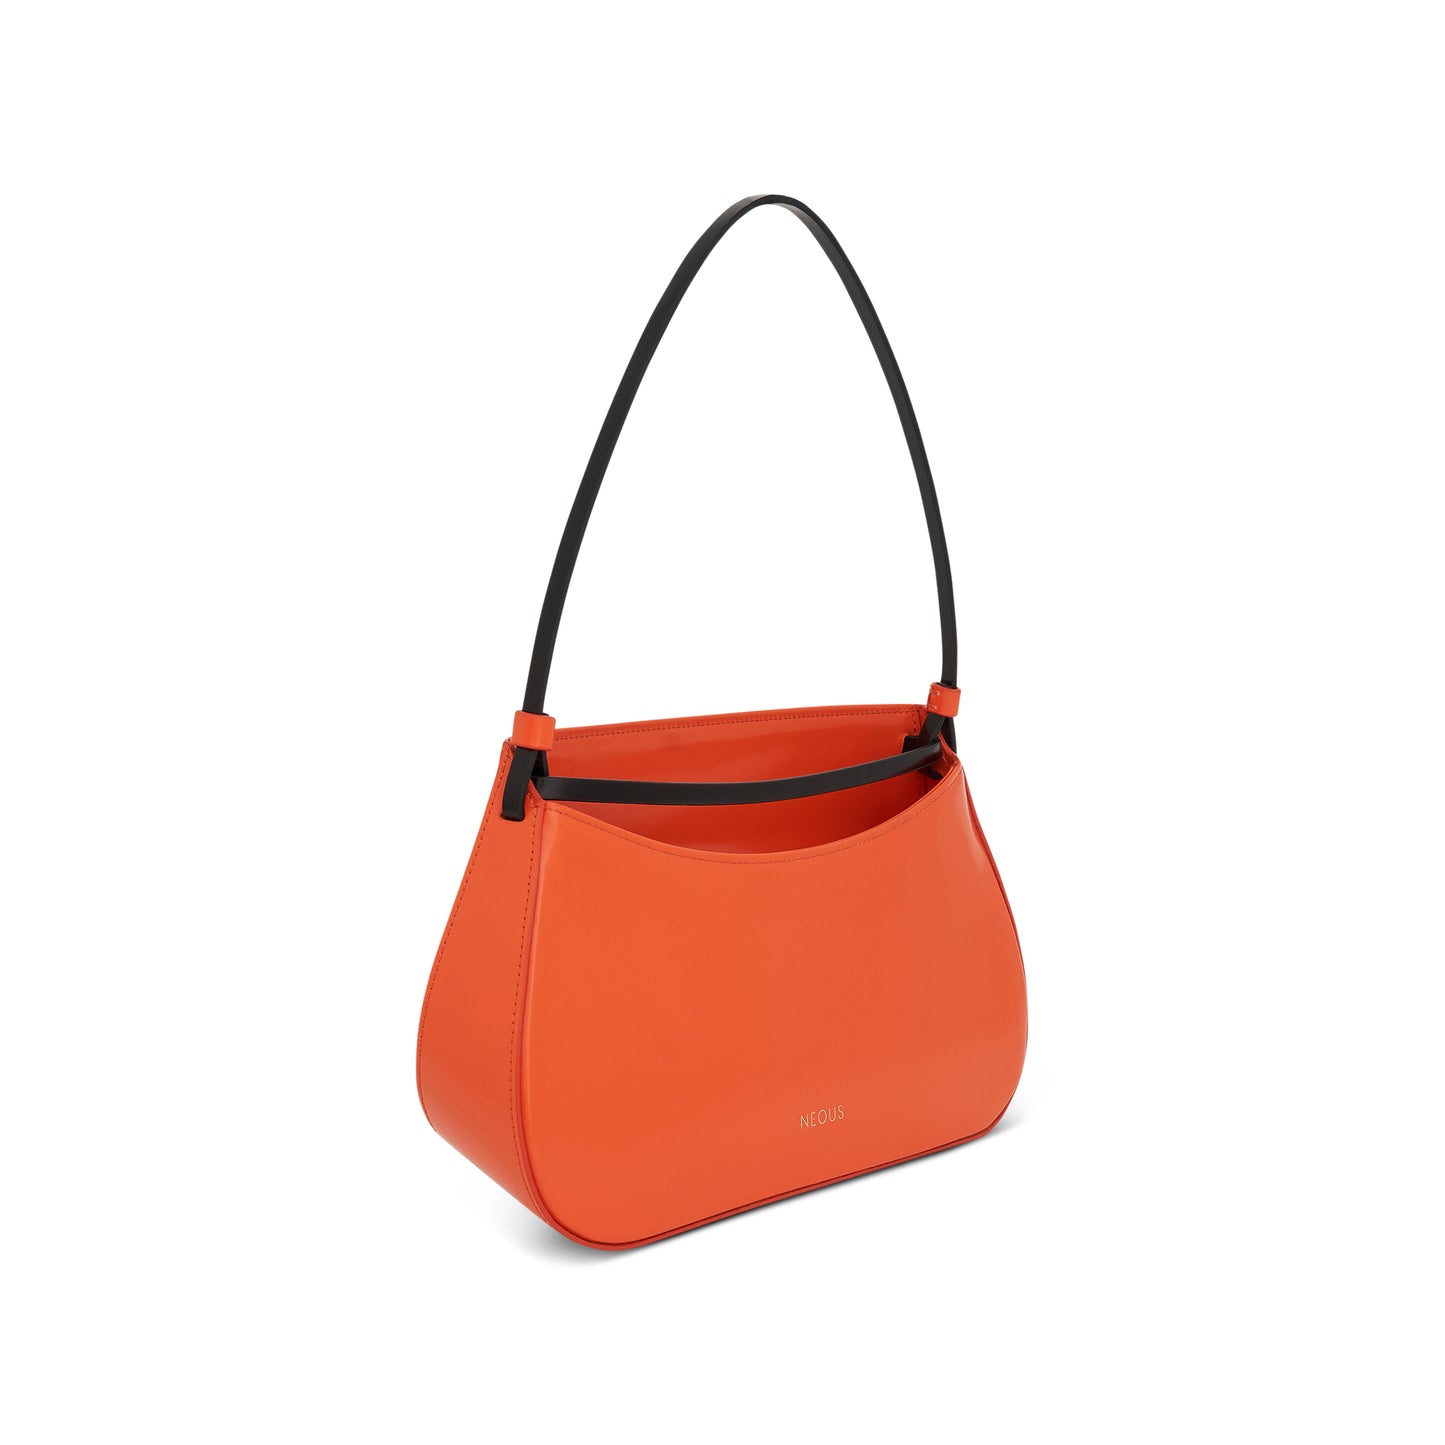 Zeta Baguette Bag in Orange